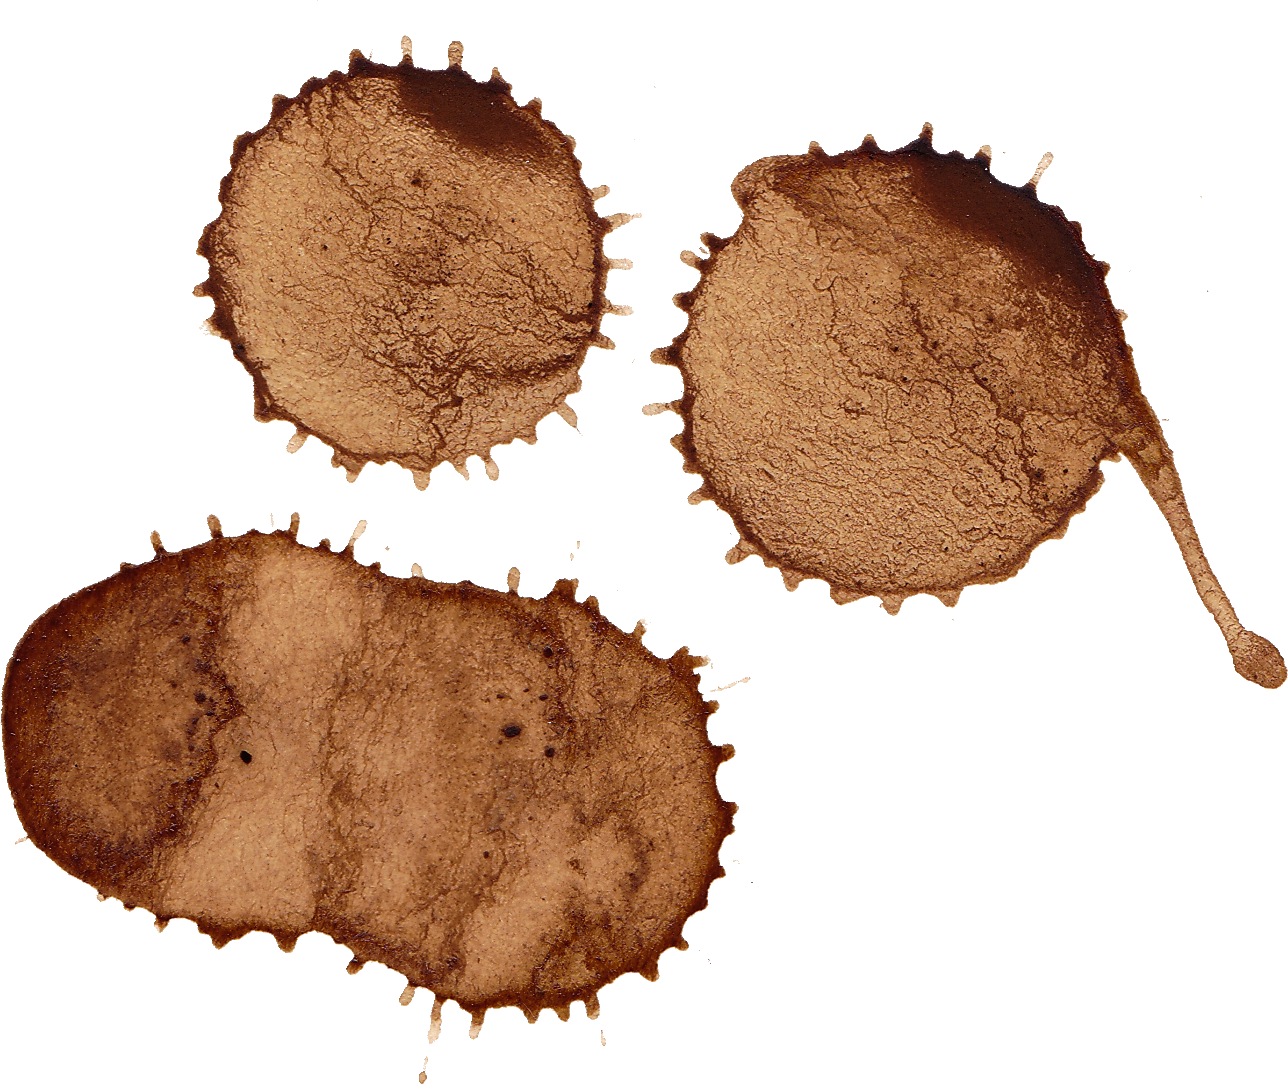 A Group Of Blots Of Brown Liquid